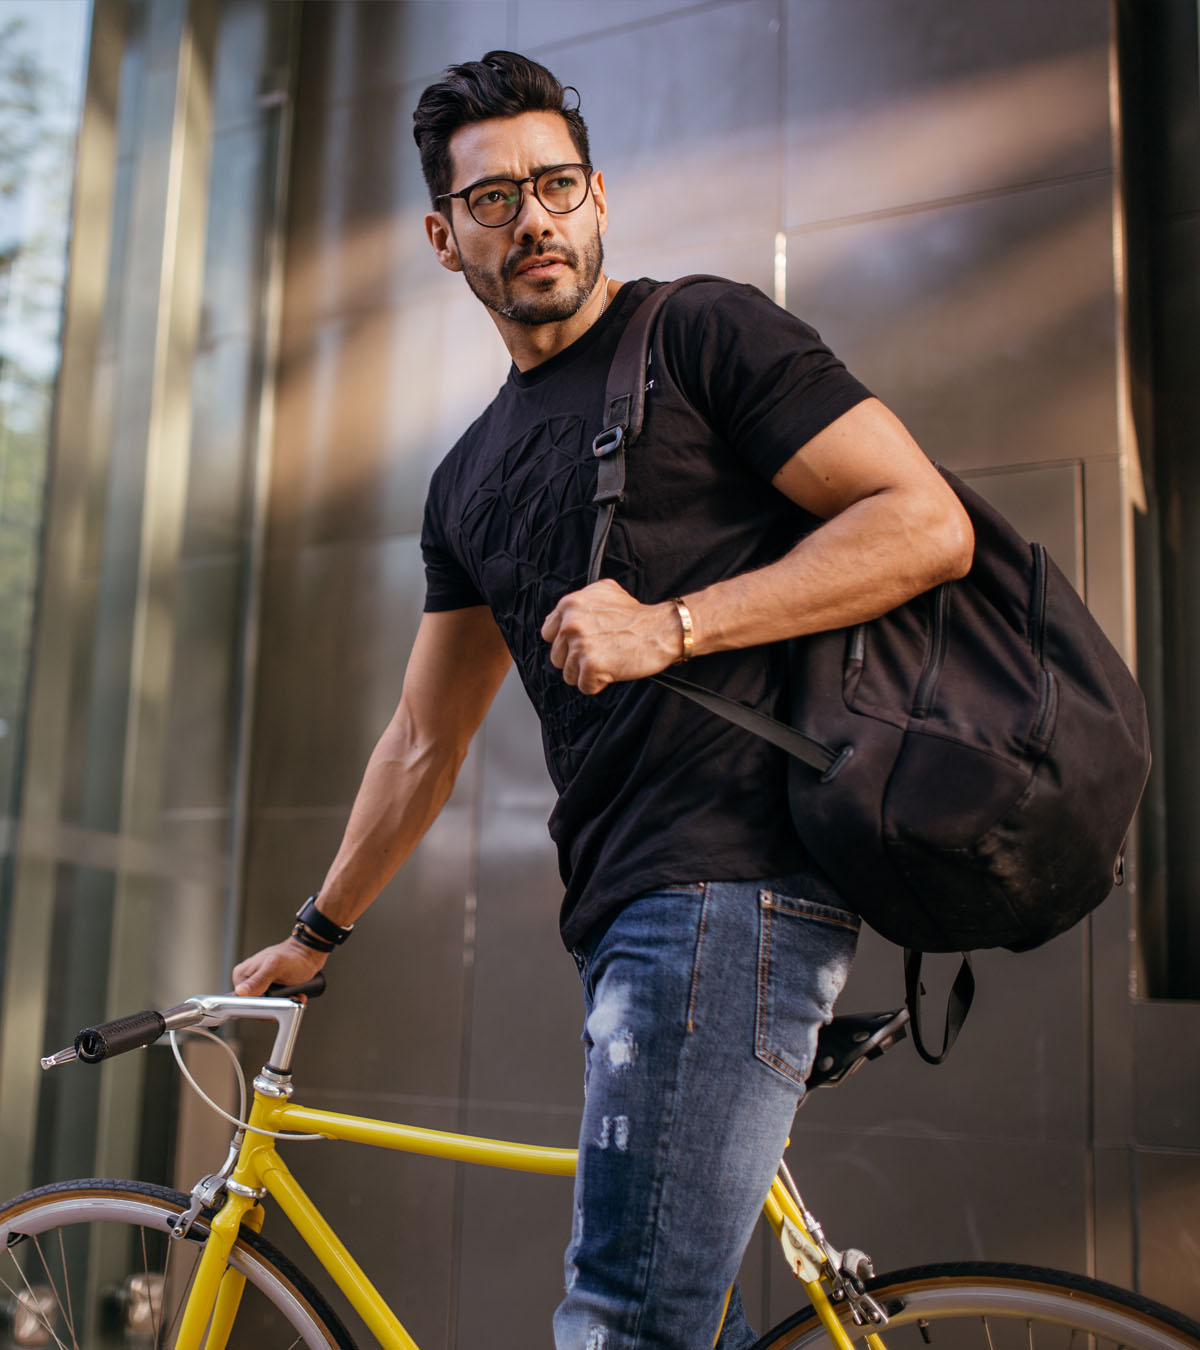 Man on bike with sports bag